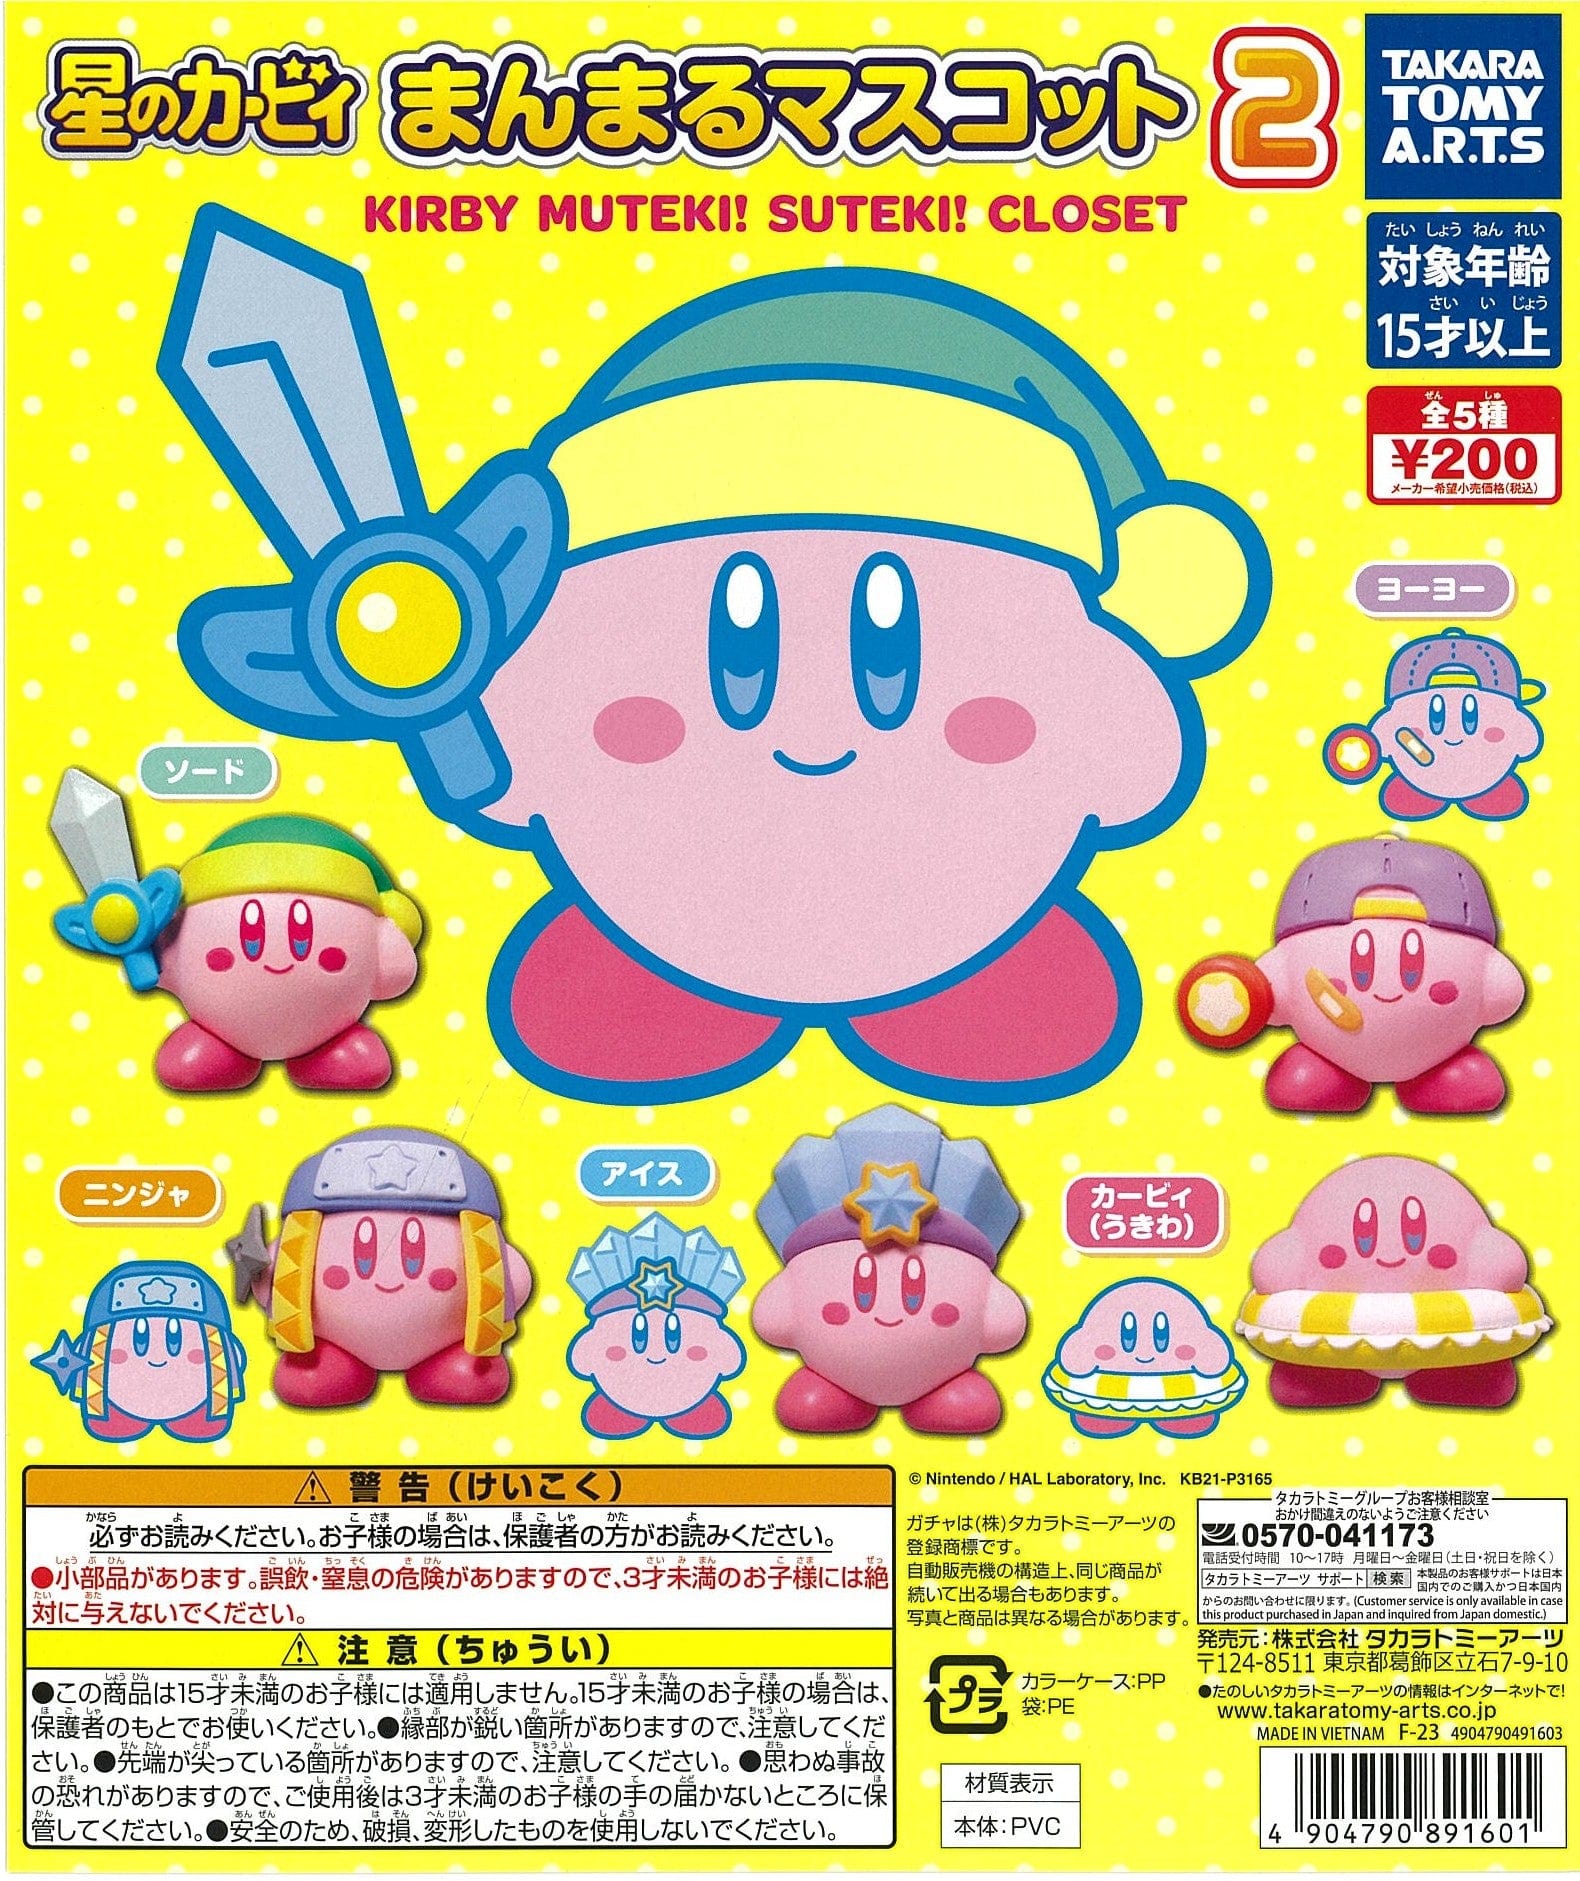 TAKARA TOMY ARTS CP2434 Kirby's Dream Land Manmaru Mascot KIRBY MUTEK! I SUTEK! I CLOSET 2